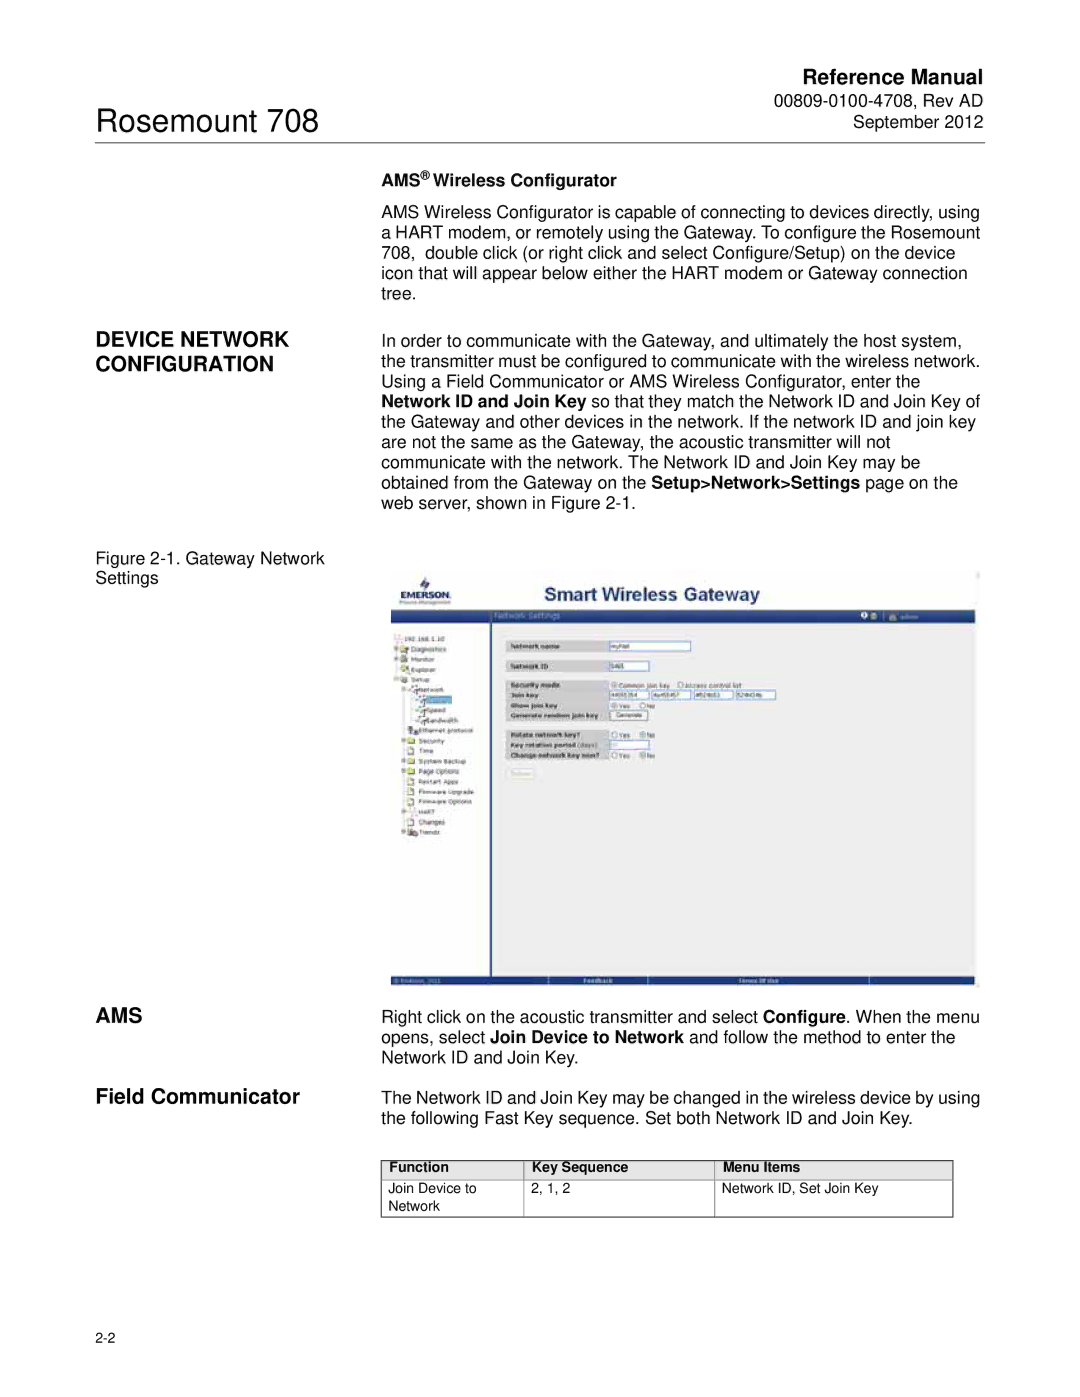 Emerson 708 manual Device Network Configuration, Ams, Field Communicator, AMS Wireless Configurator 